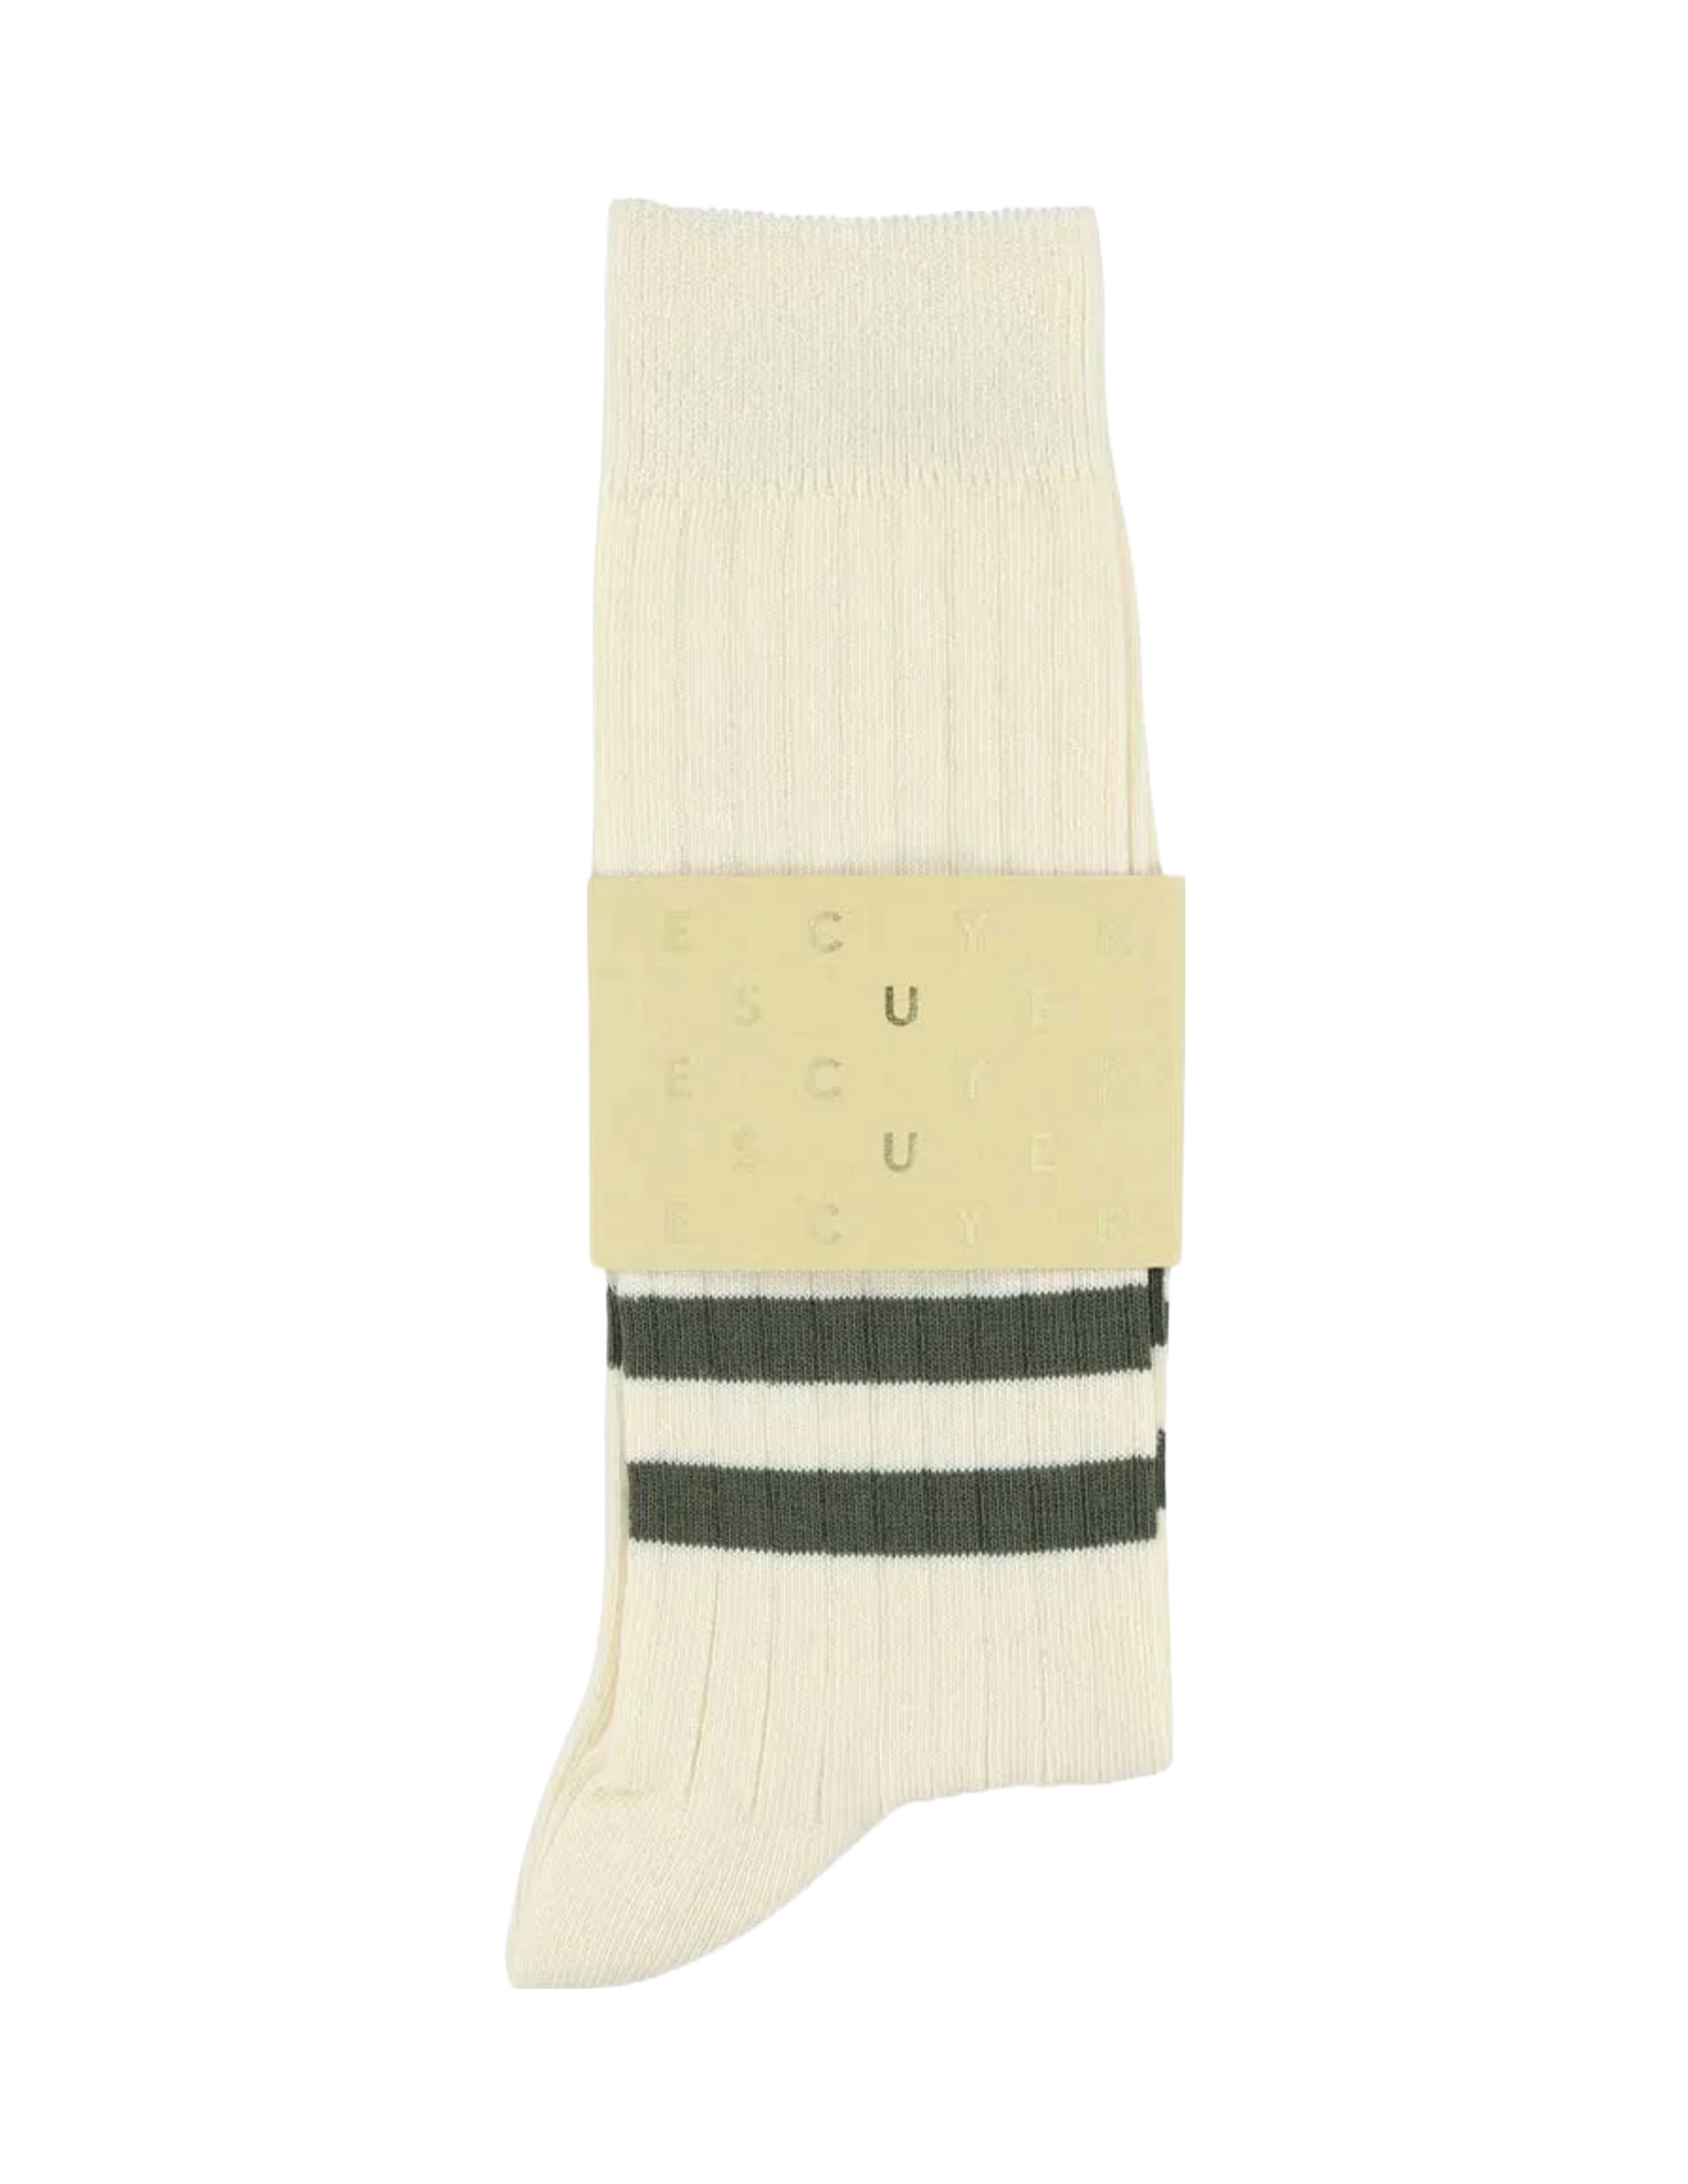 Stripe Socks - Ecru/Khaki